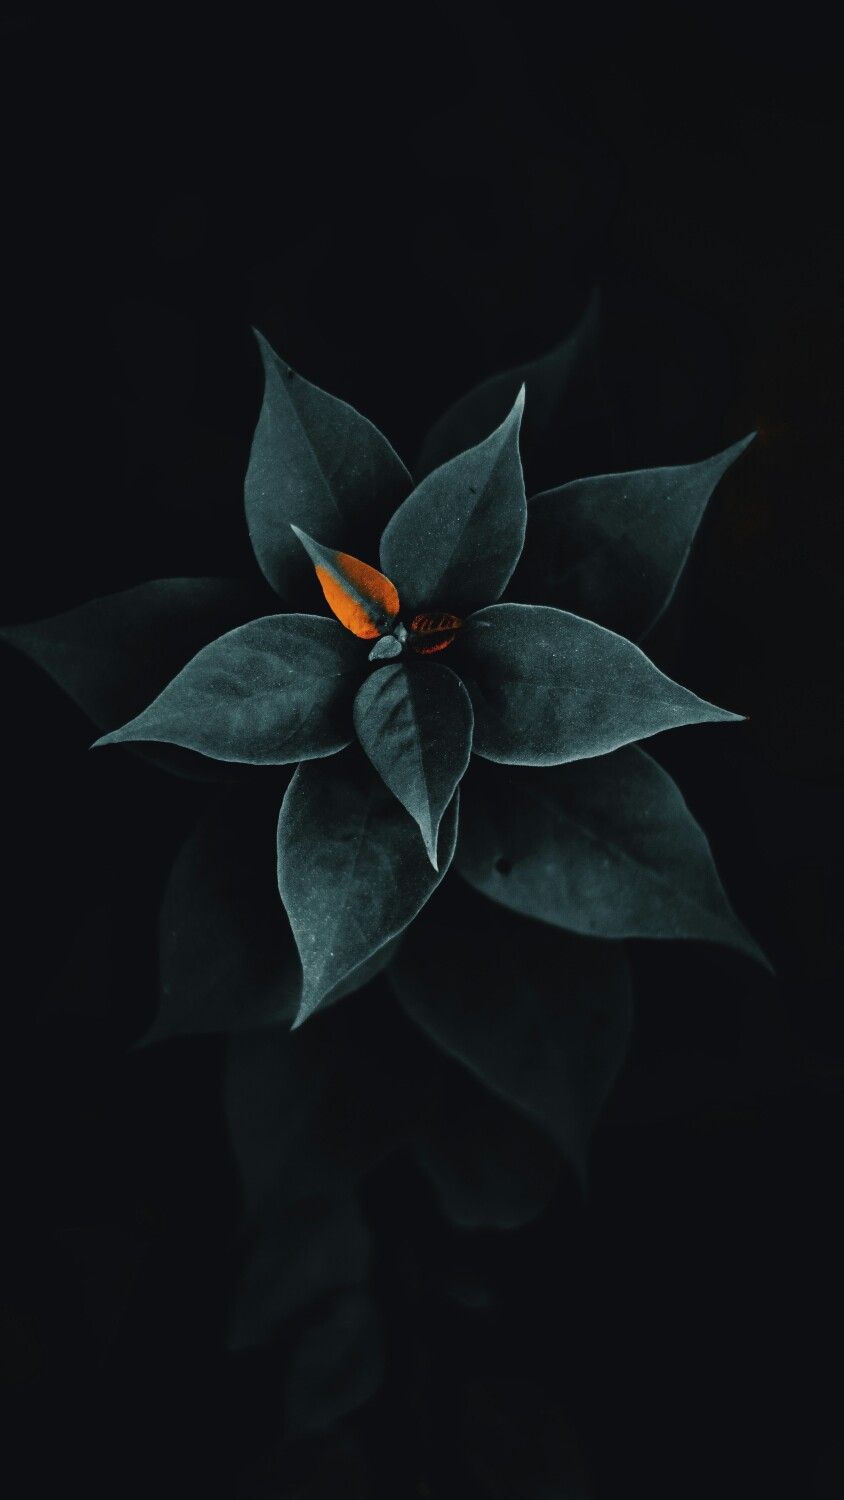 iPhone Wallpaper. Leaf, Plant, Flower, Botany, Still life photography, Illustration